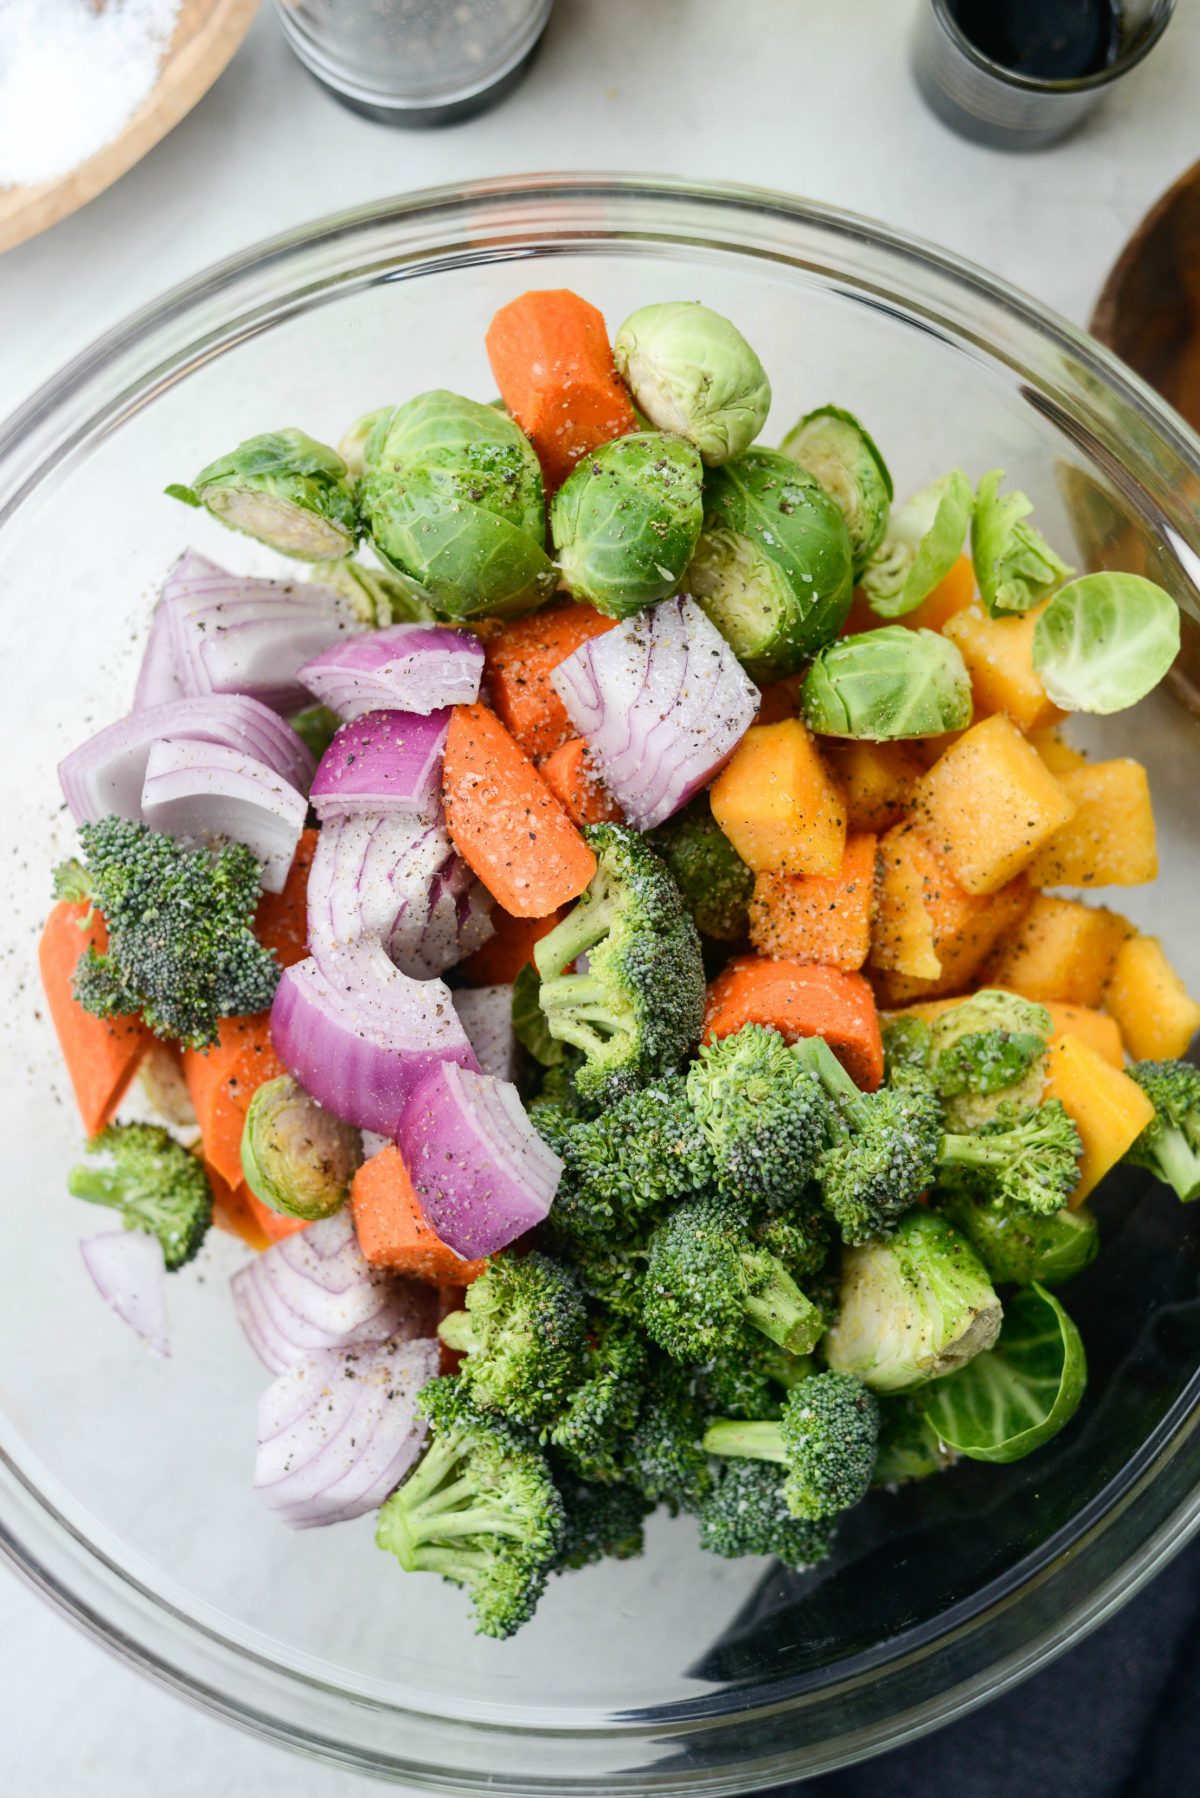 season veggies in a bowl